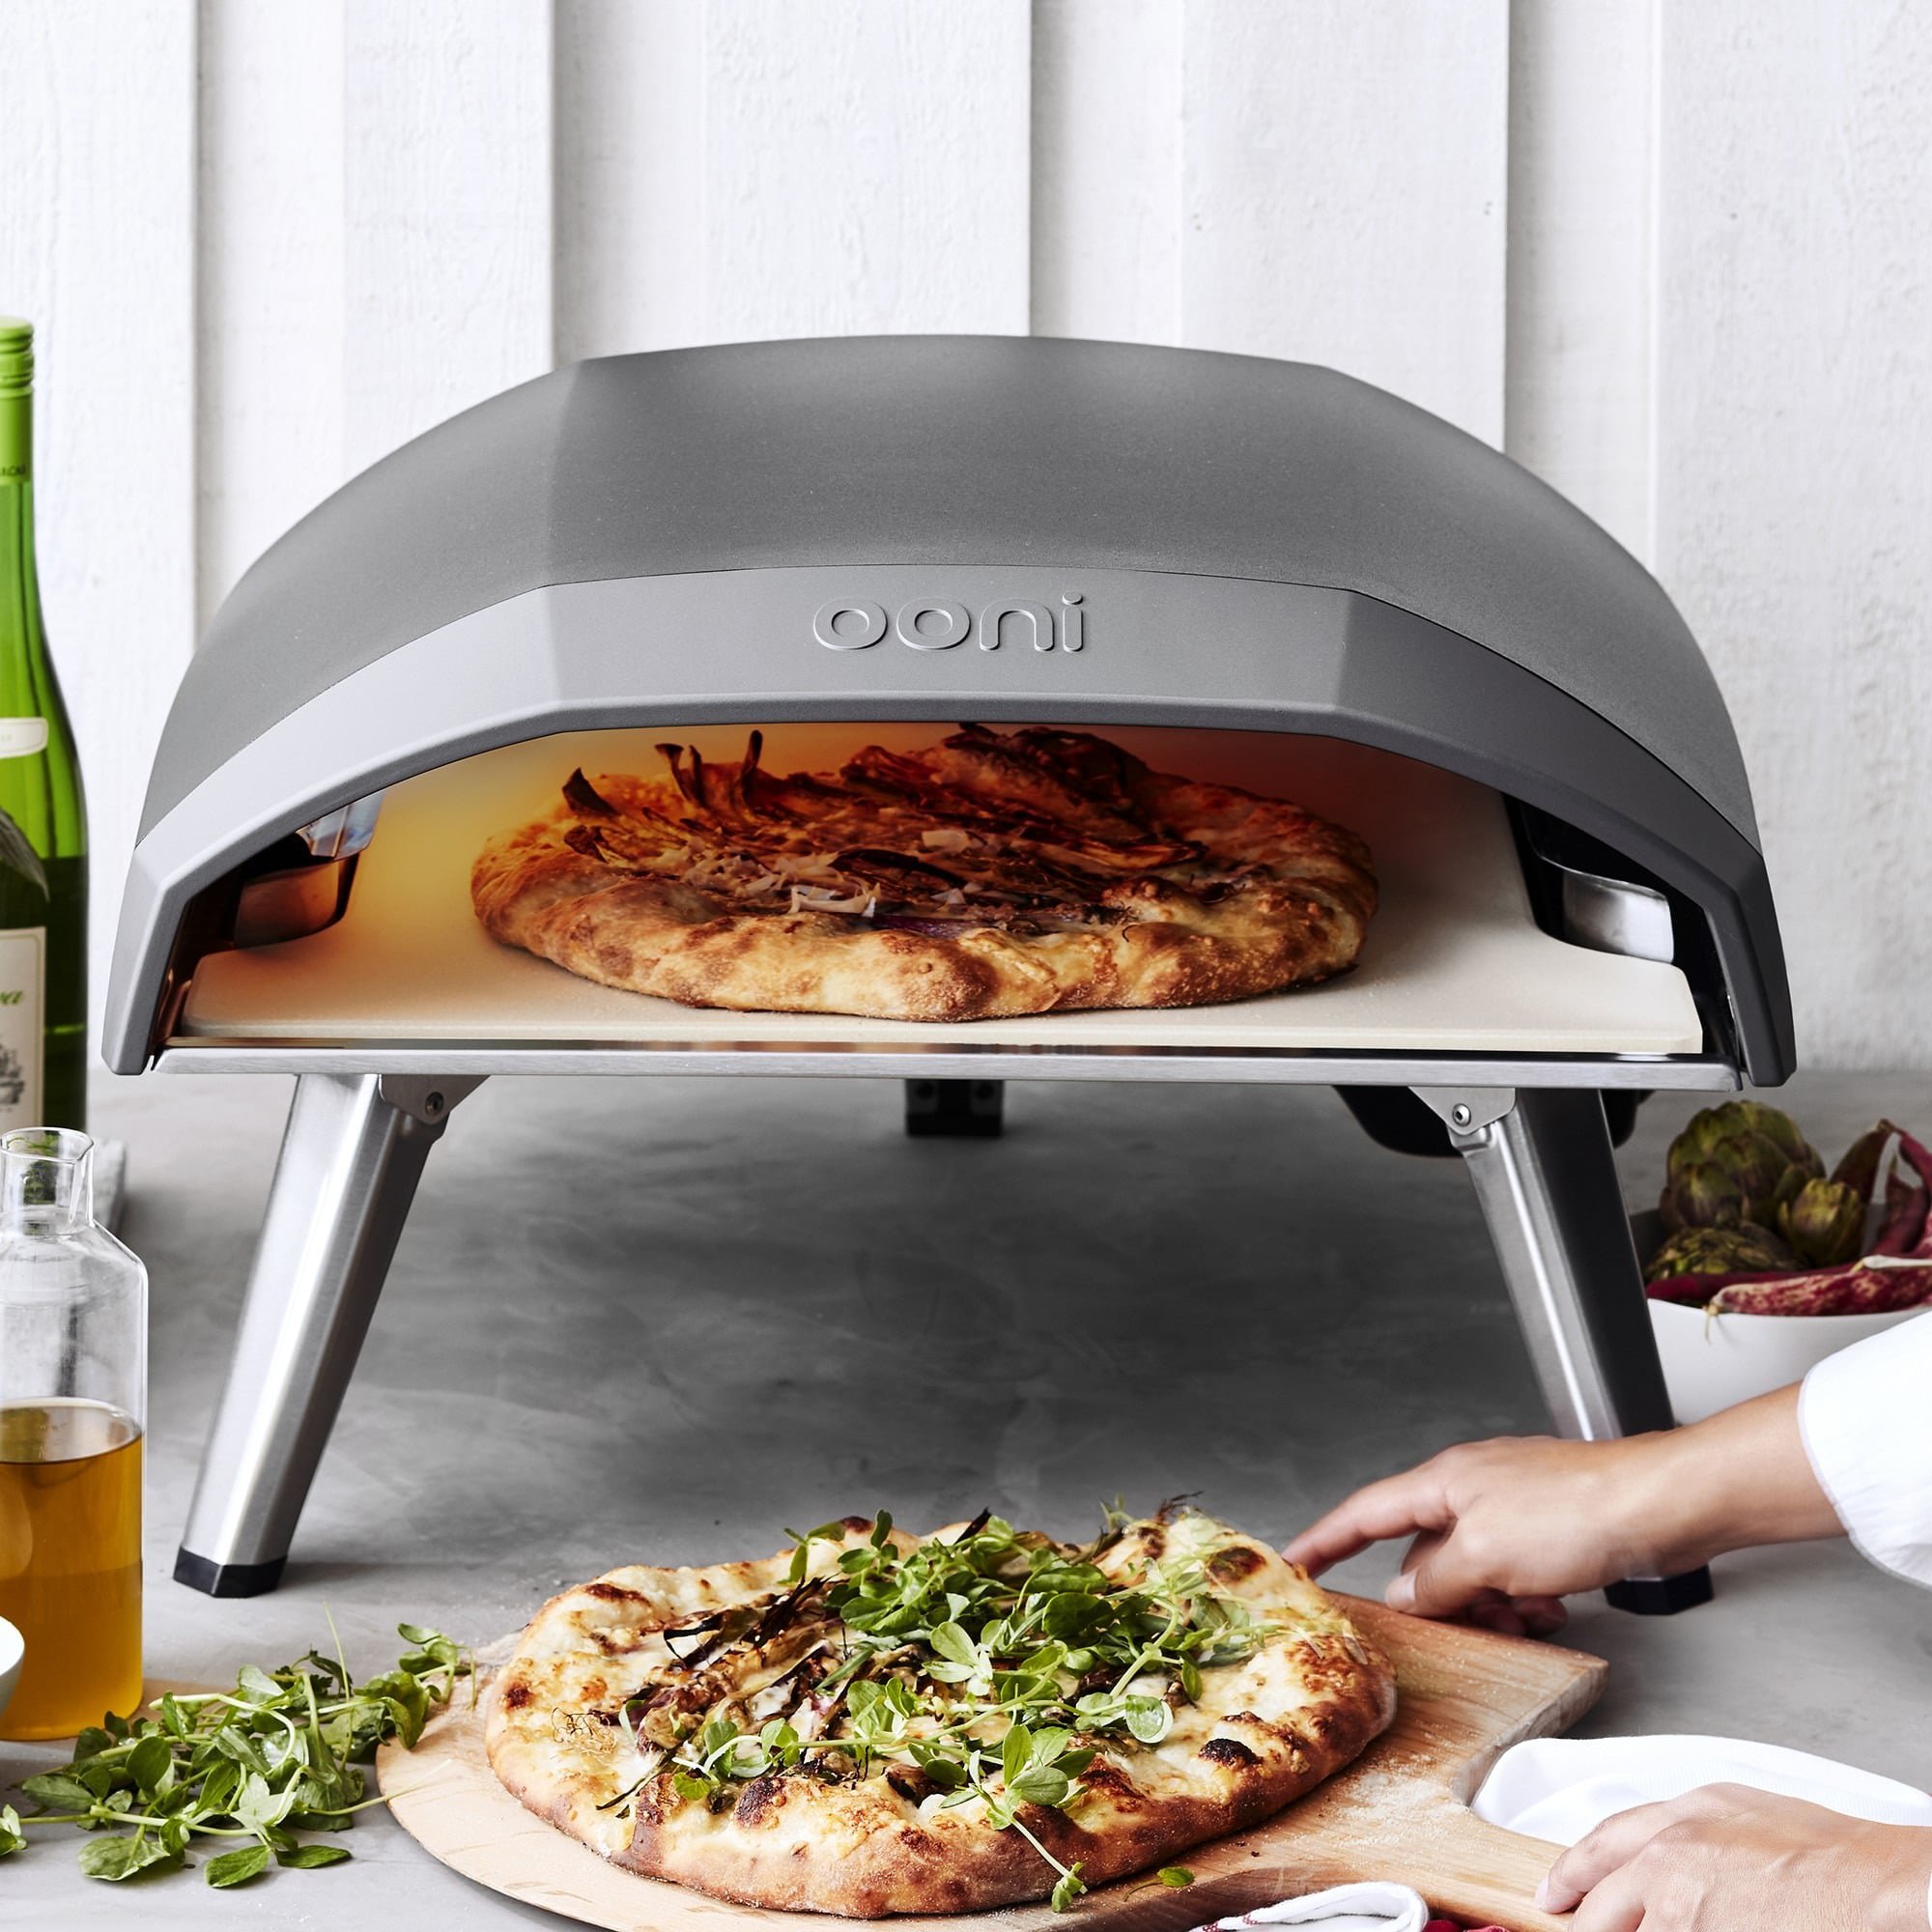 wedding registry ideas Ooni Koda 16 inch pizza oven from williams sonoma